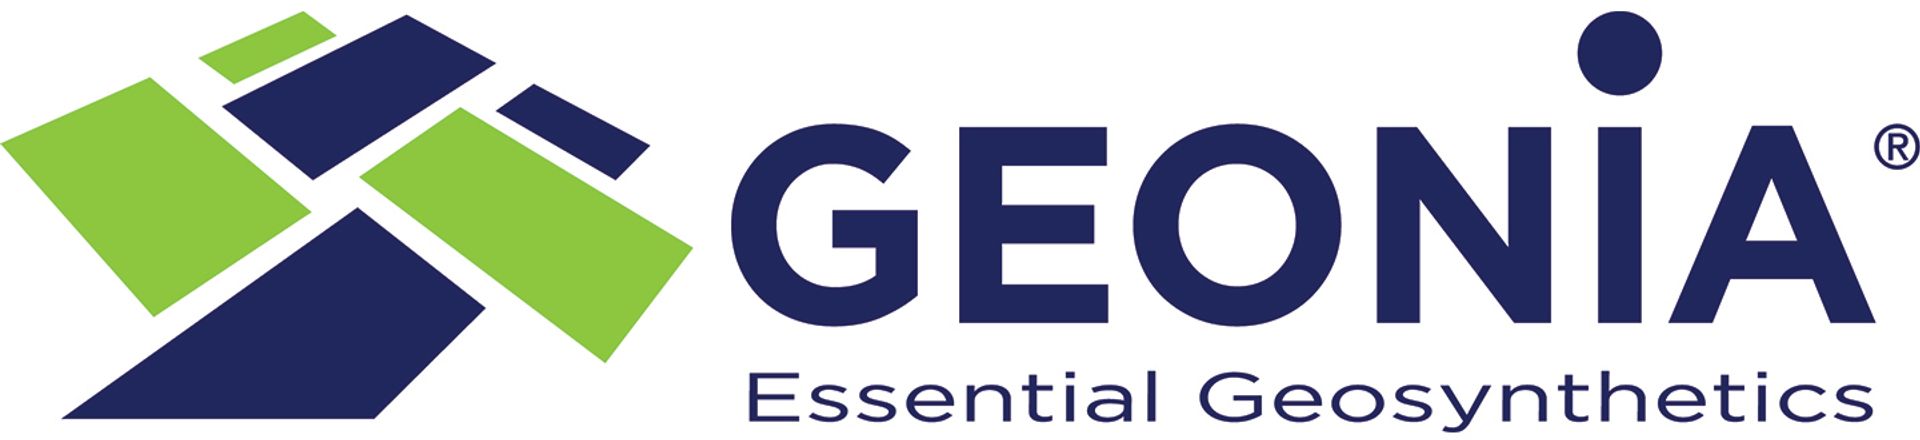 Geonia - Daeyoun Geotech